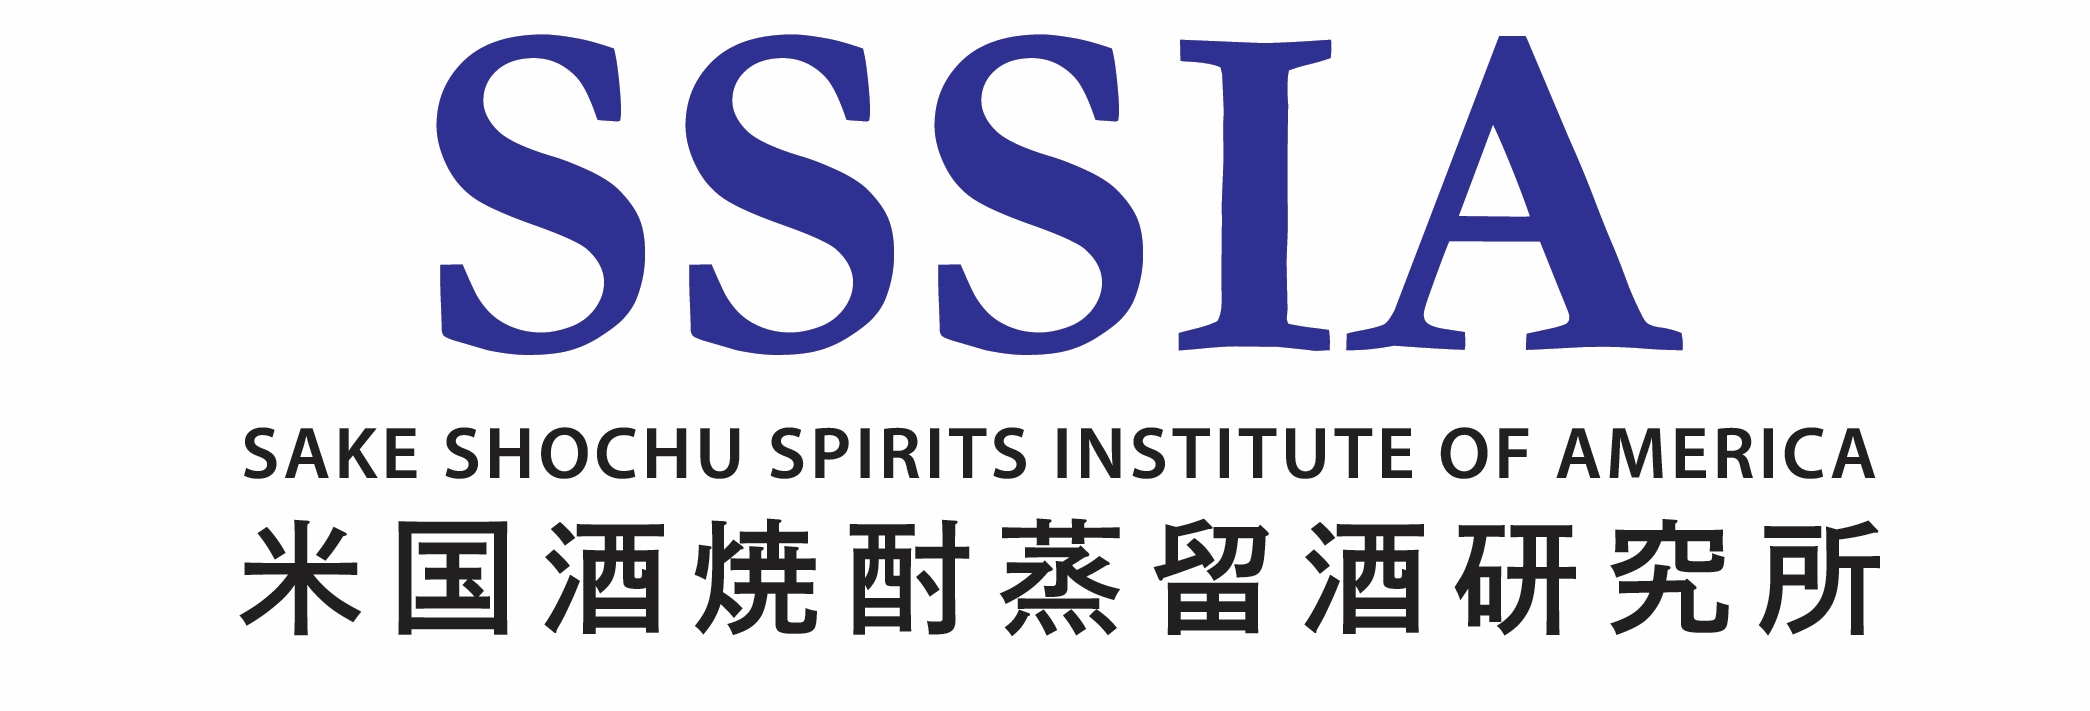 logo of SSSIA